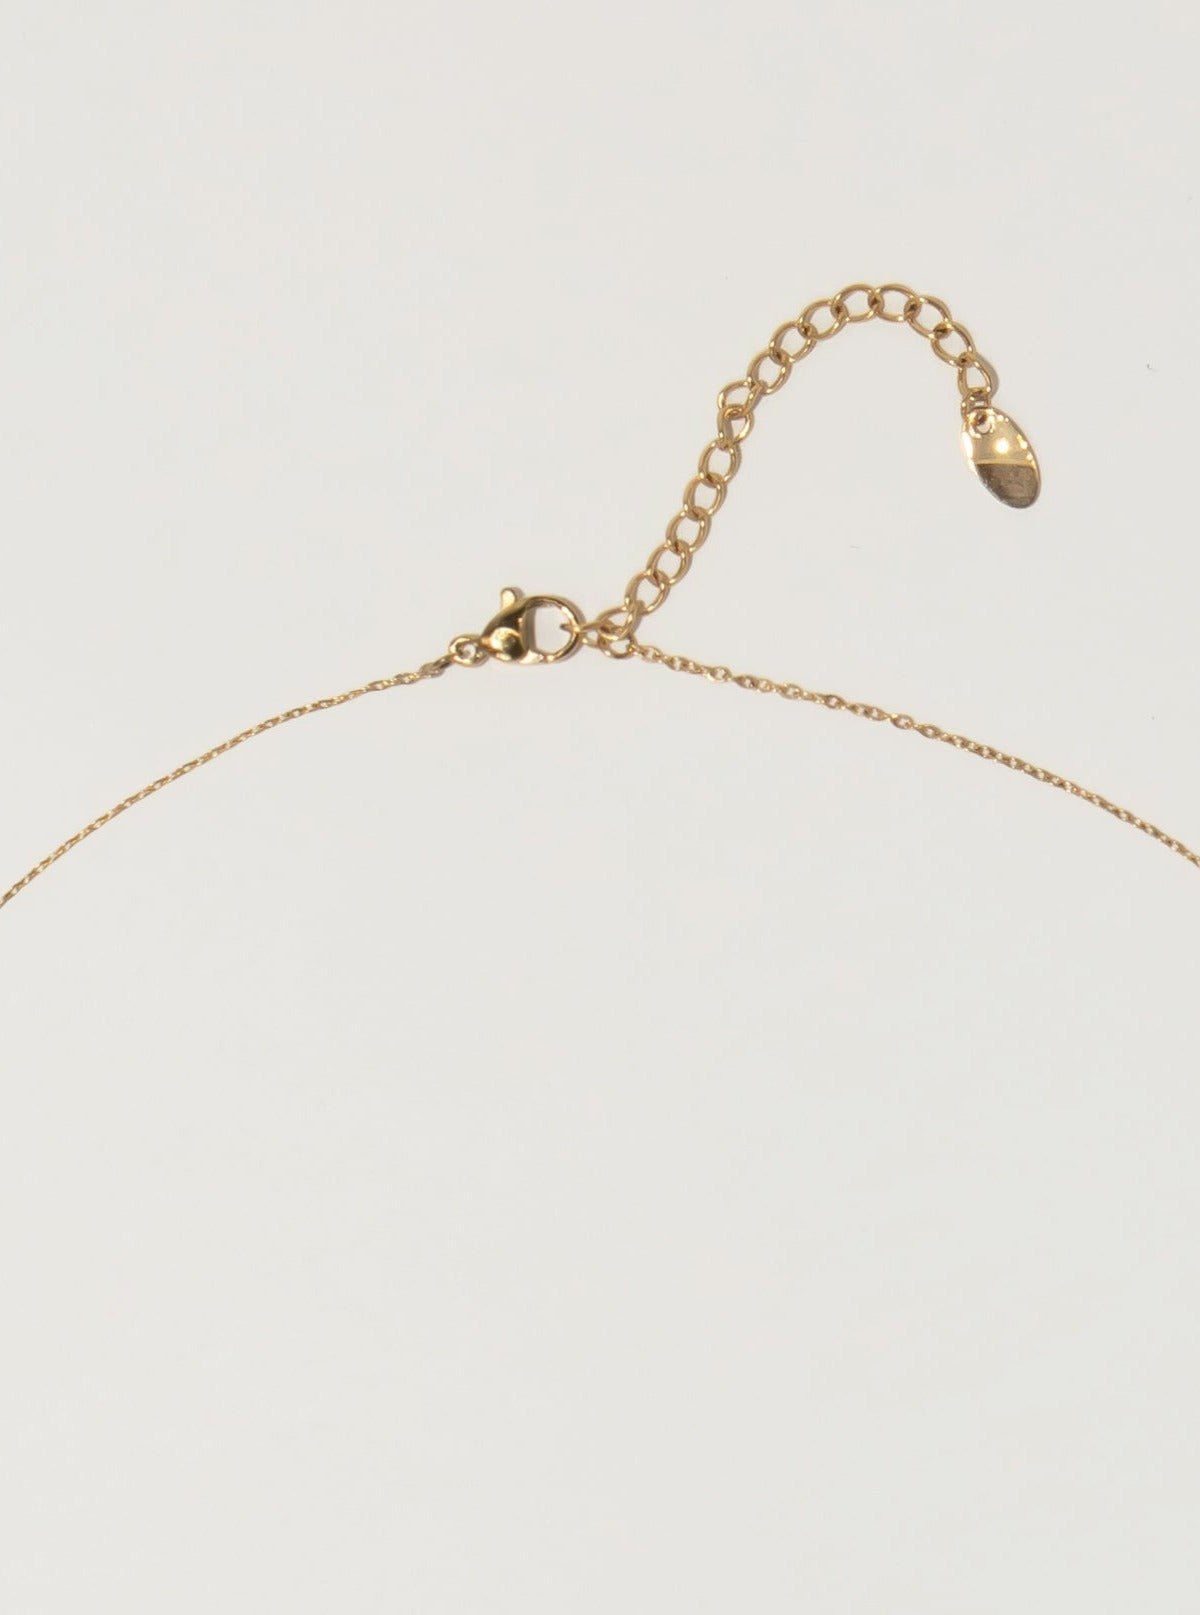 Carnelian Stone Heart Necklace